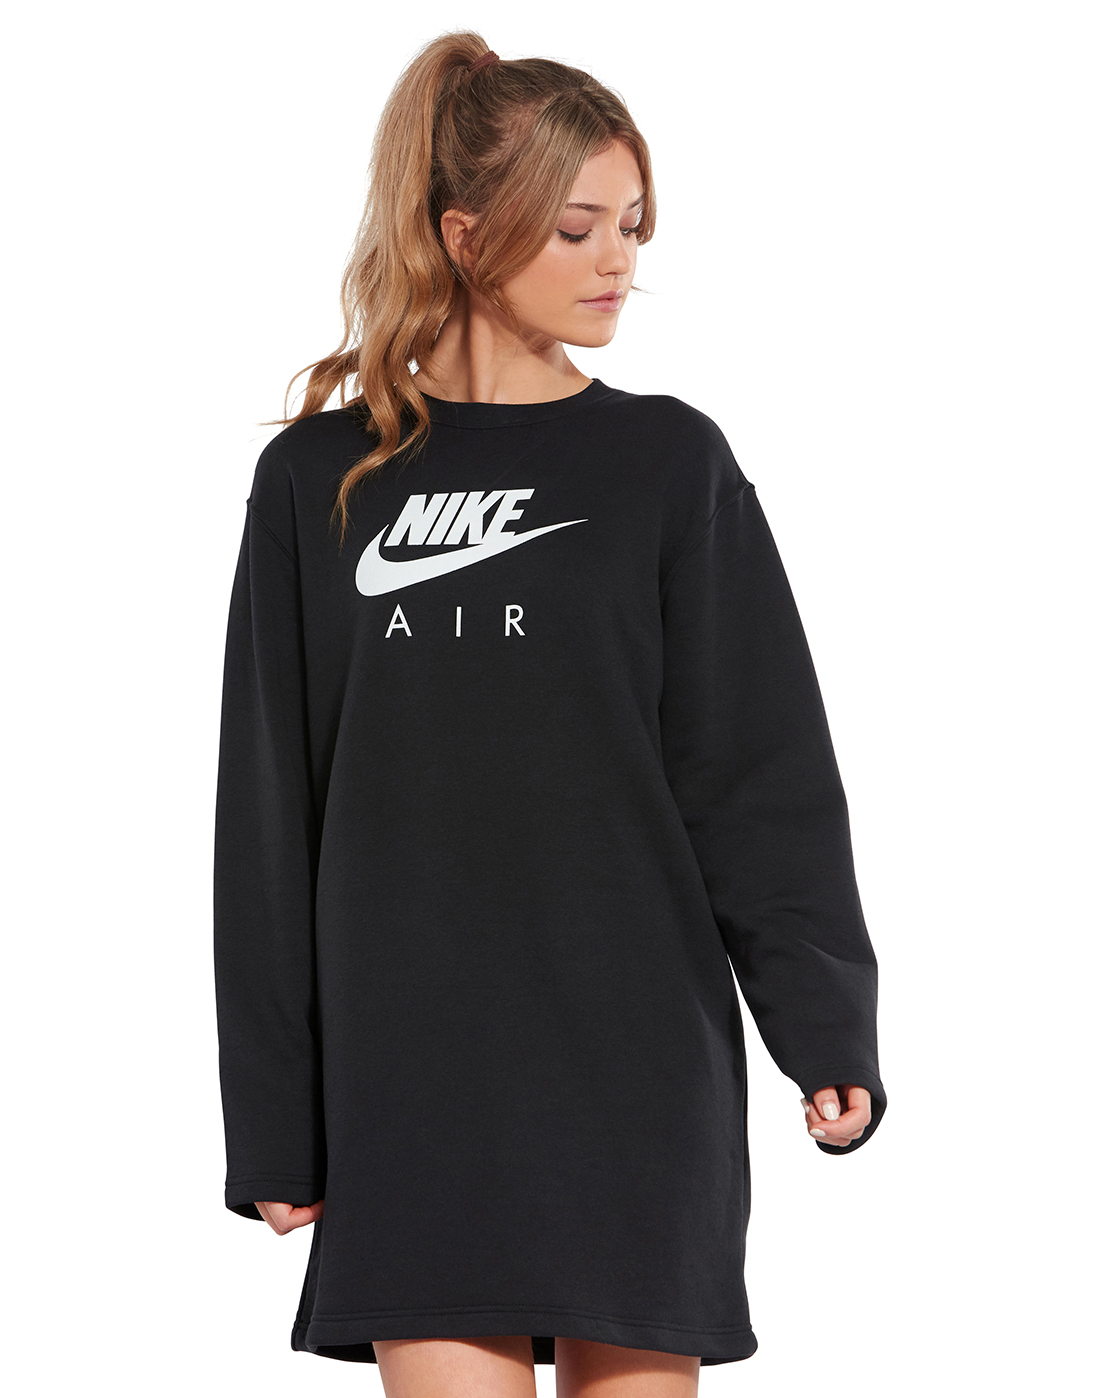 Nike Womens Air Crew Dress - Black | Life Style Sports EU